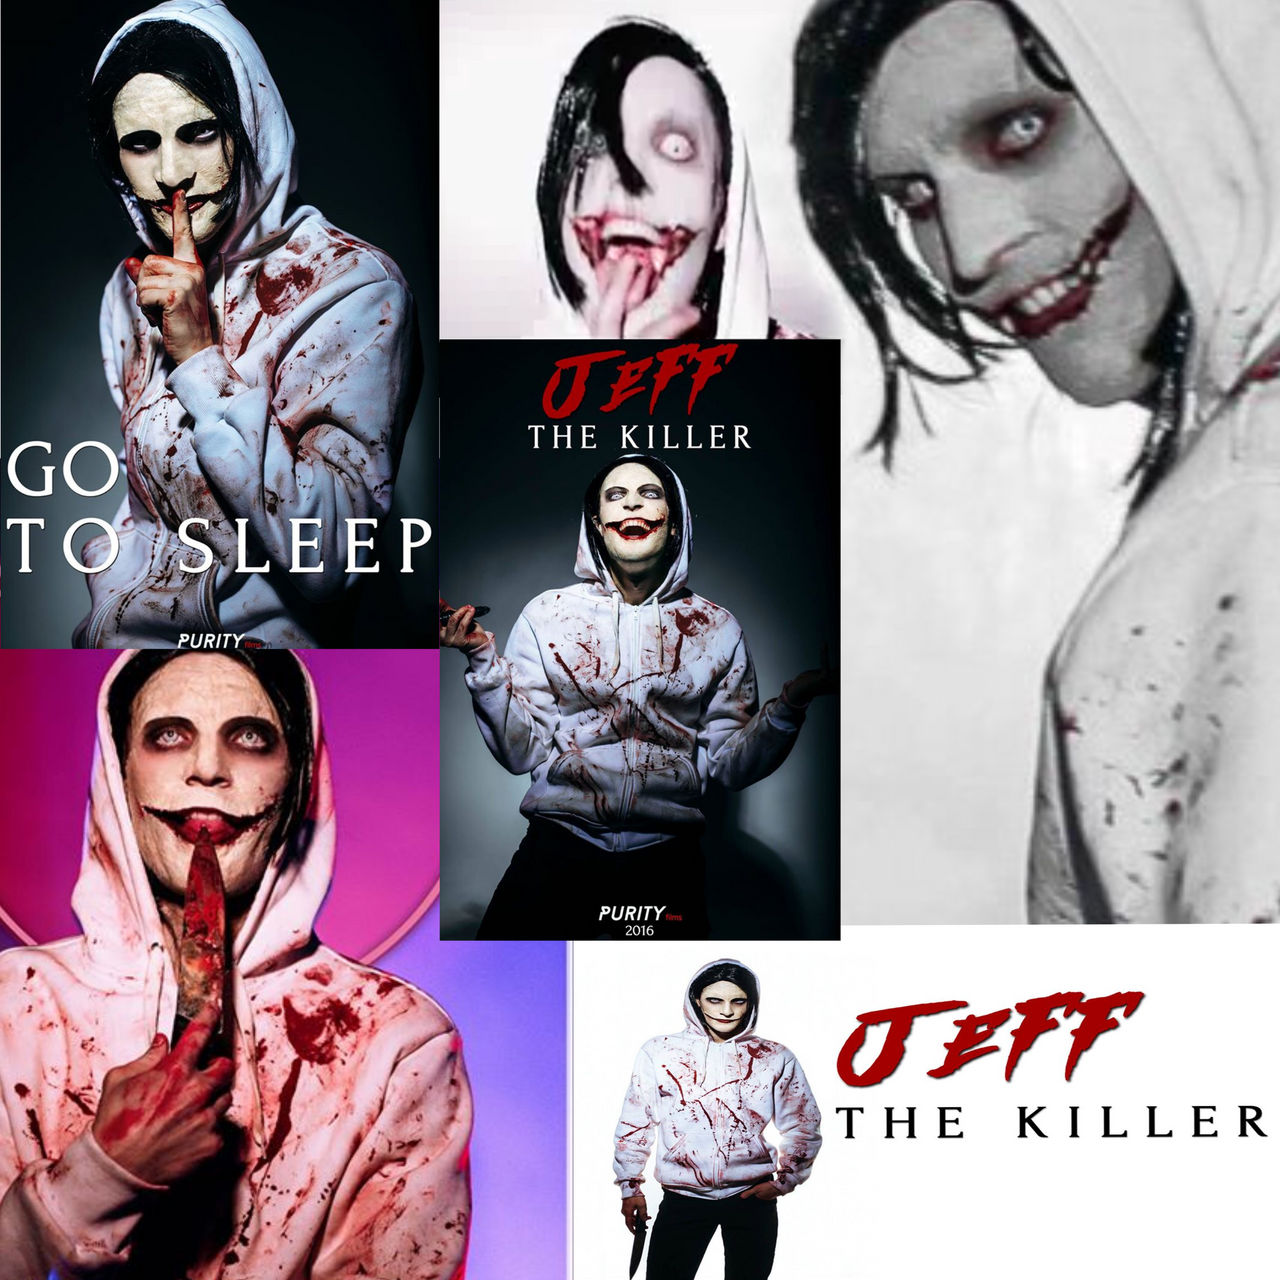 Fatos sobre Jeff the killer #Creepypasta #Jeffthekiller